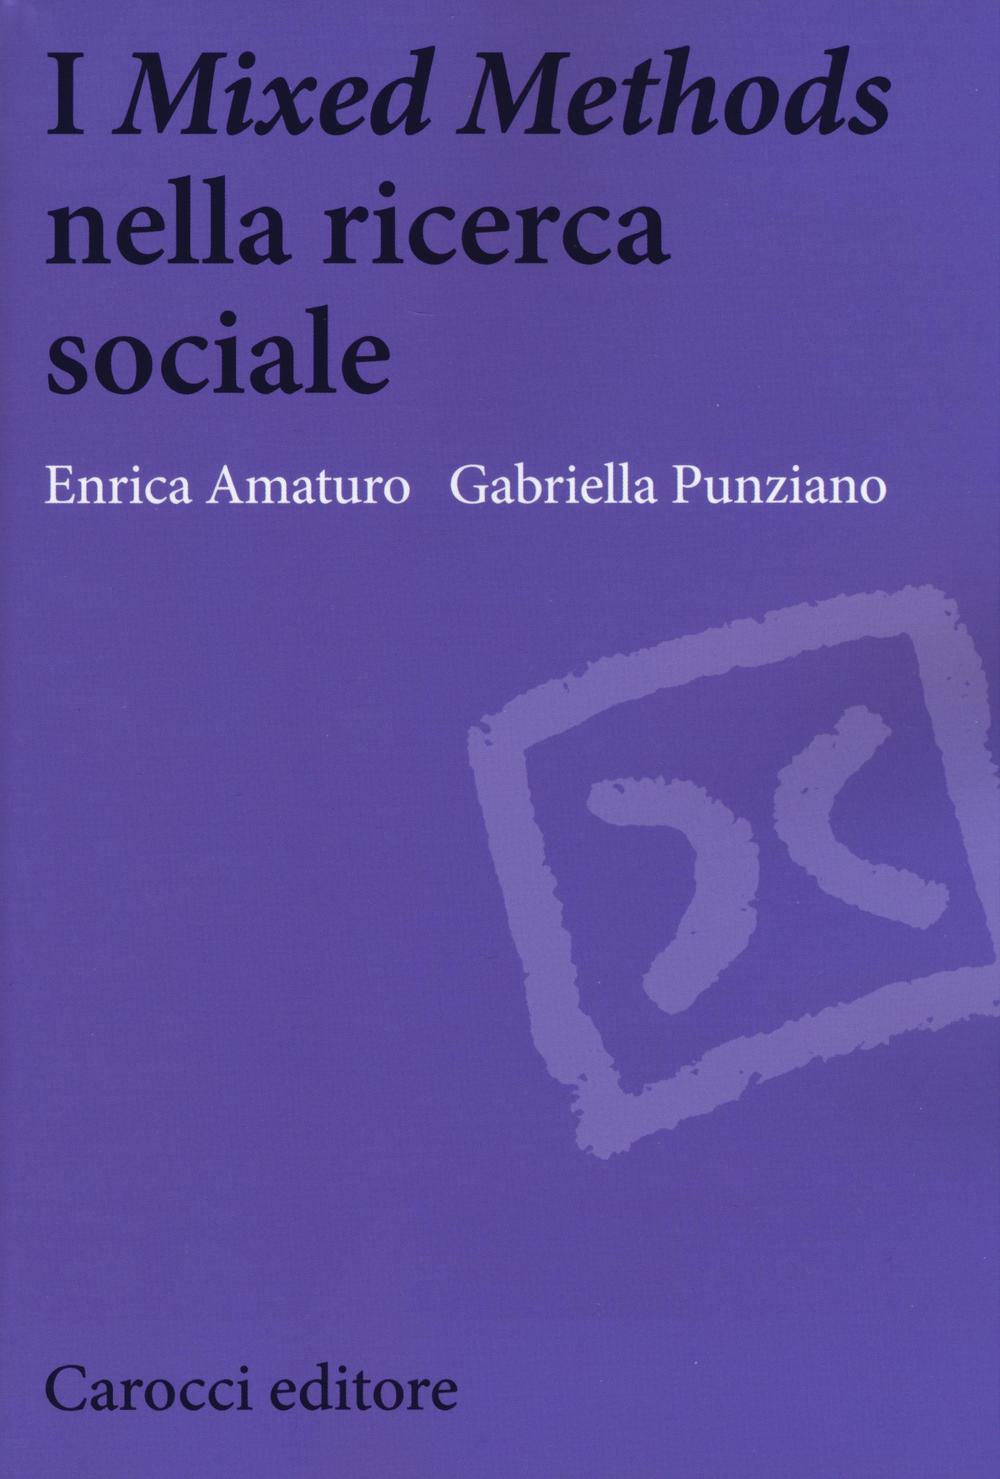 Kniha «Mixed Methods» nella ricerca sociale Enrica Amaturo